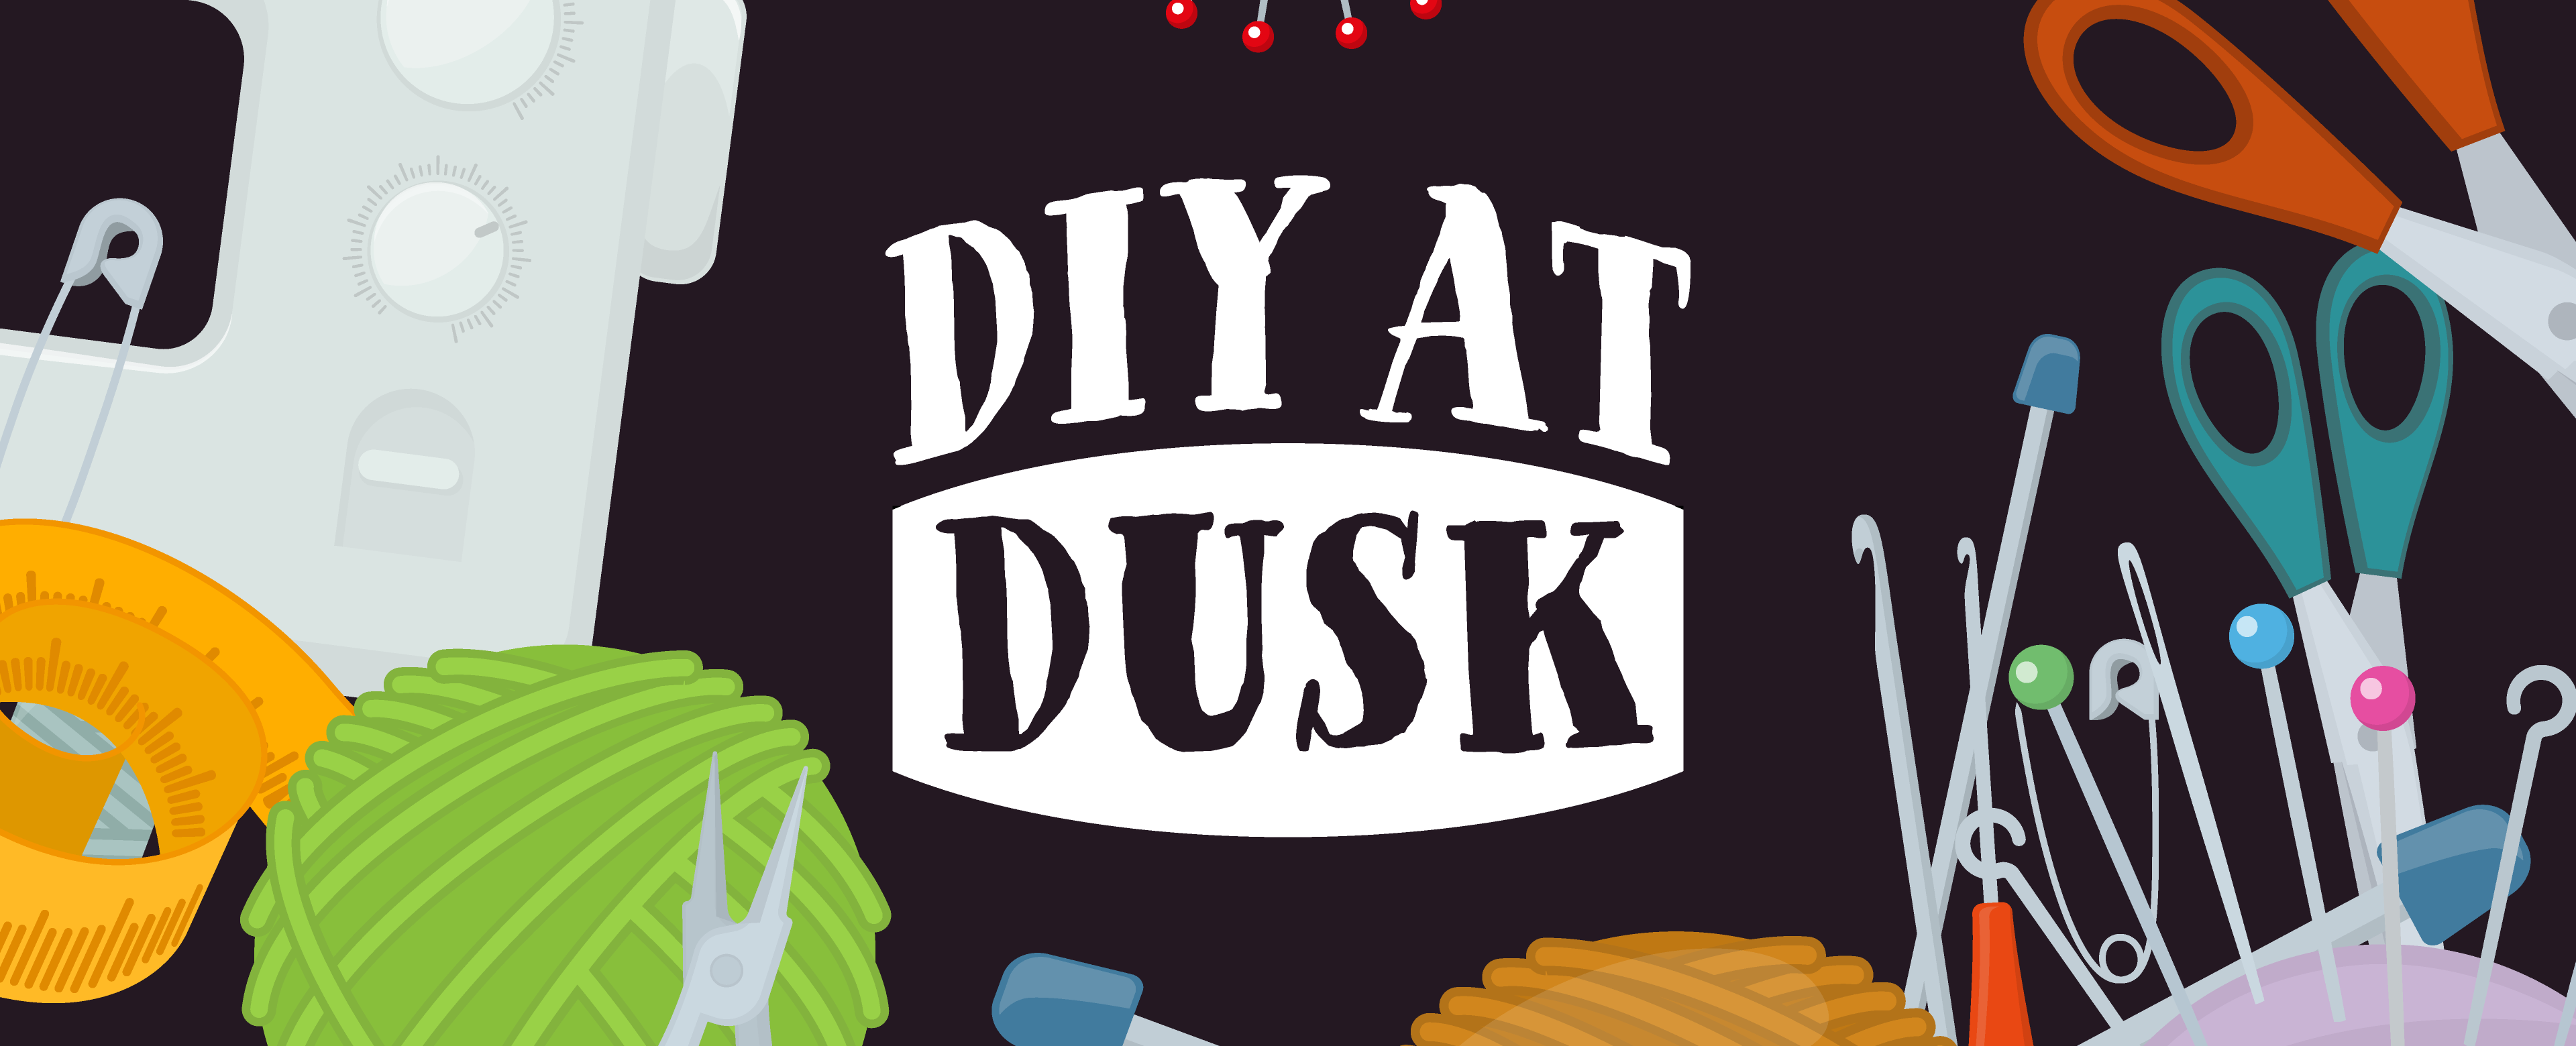 DIY at Dusk 